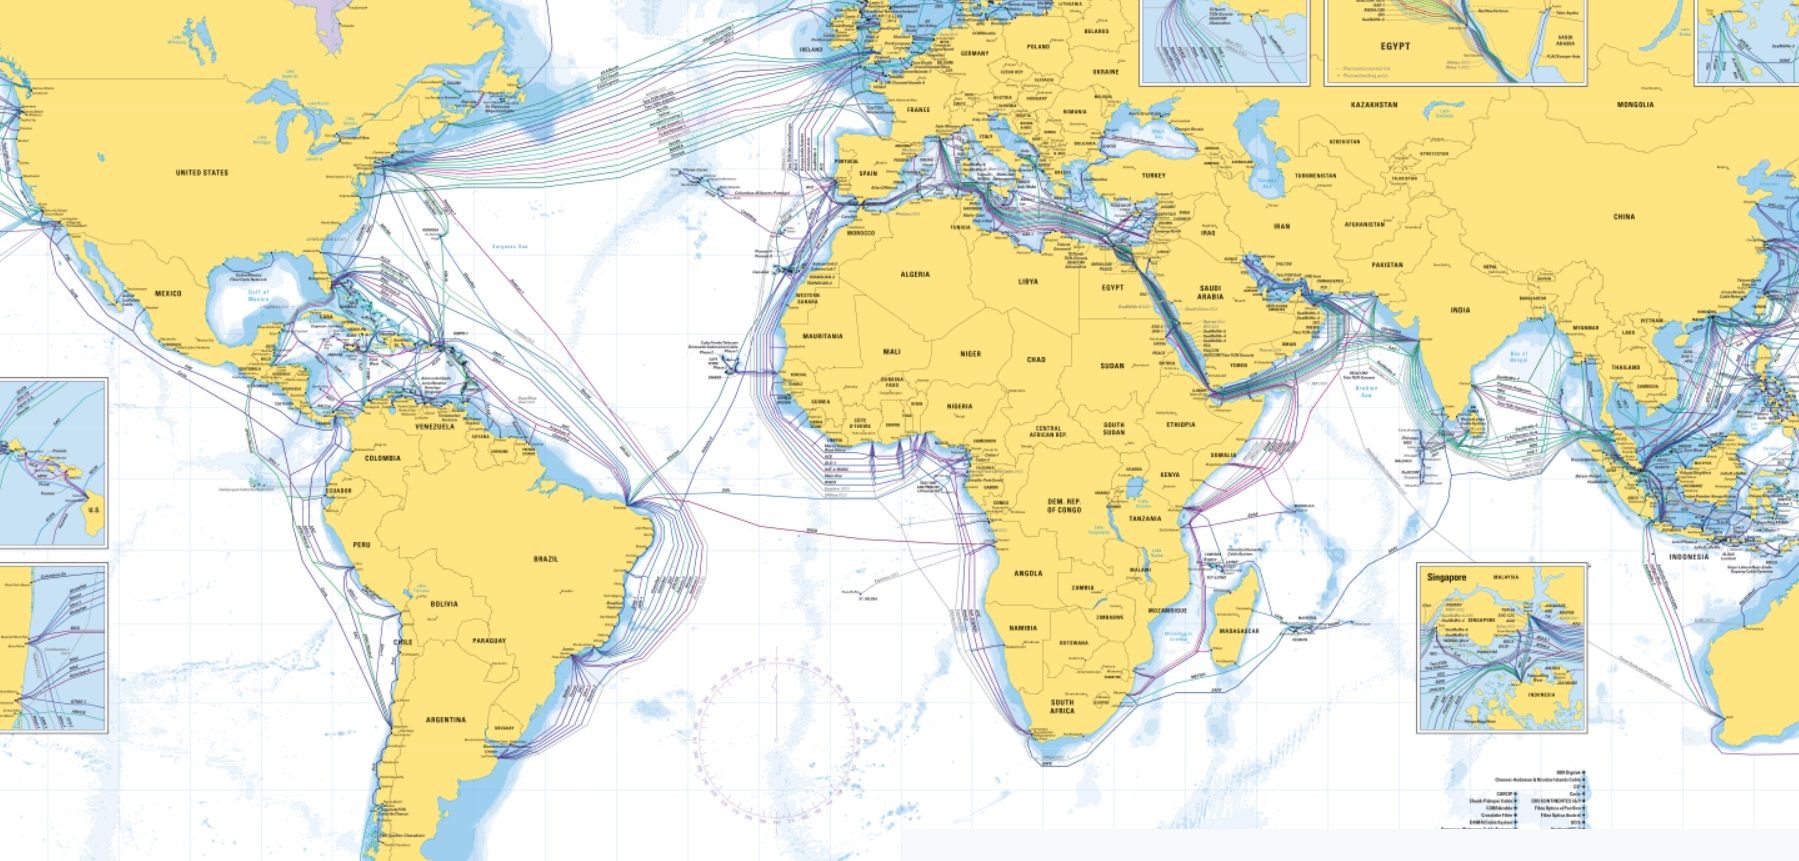 Redes de cables sumergidos entre continentes. SUBMARINE CABLE MAP